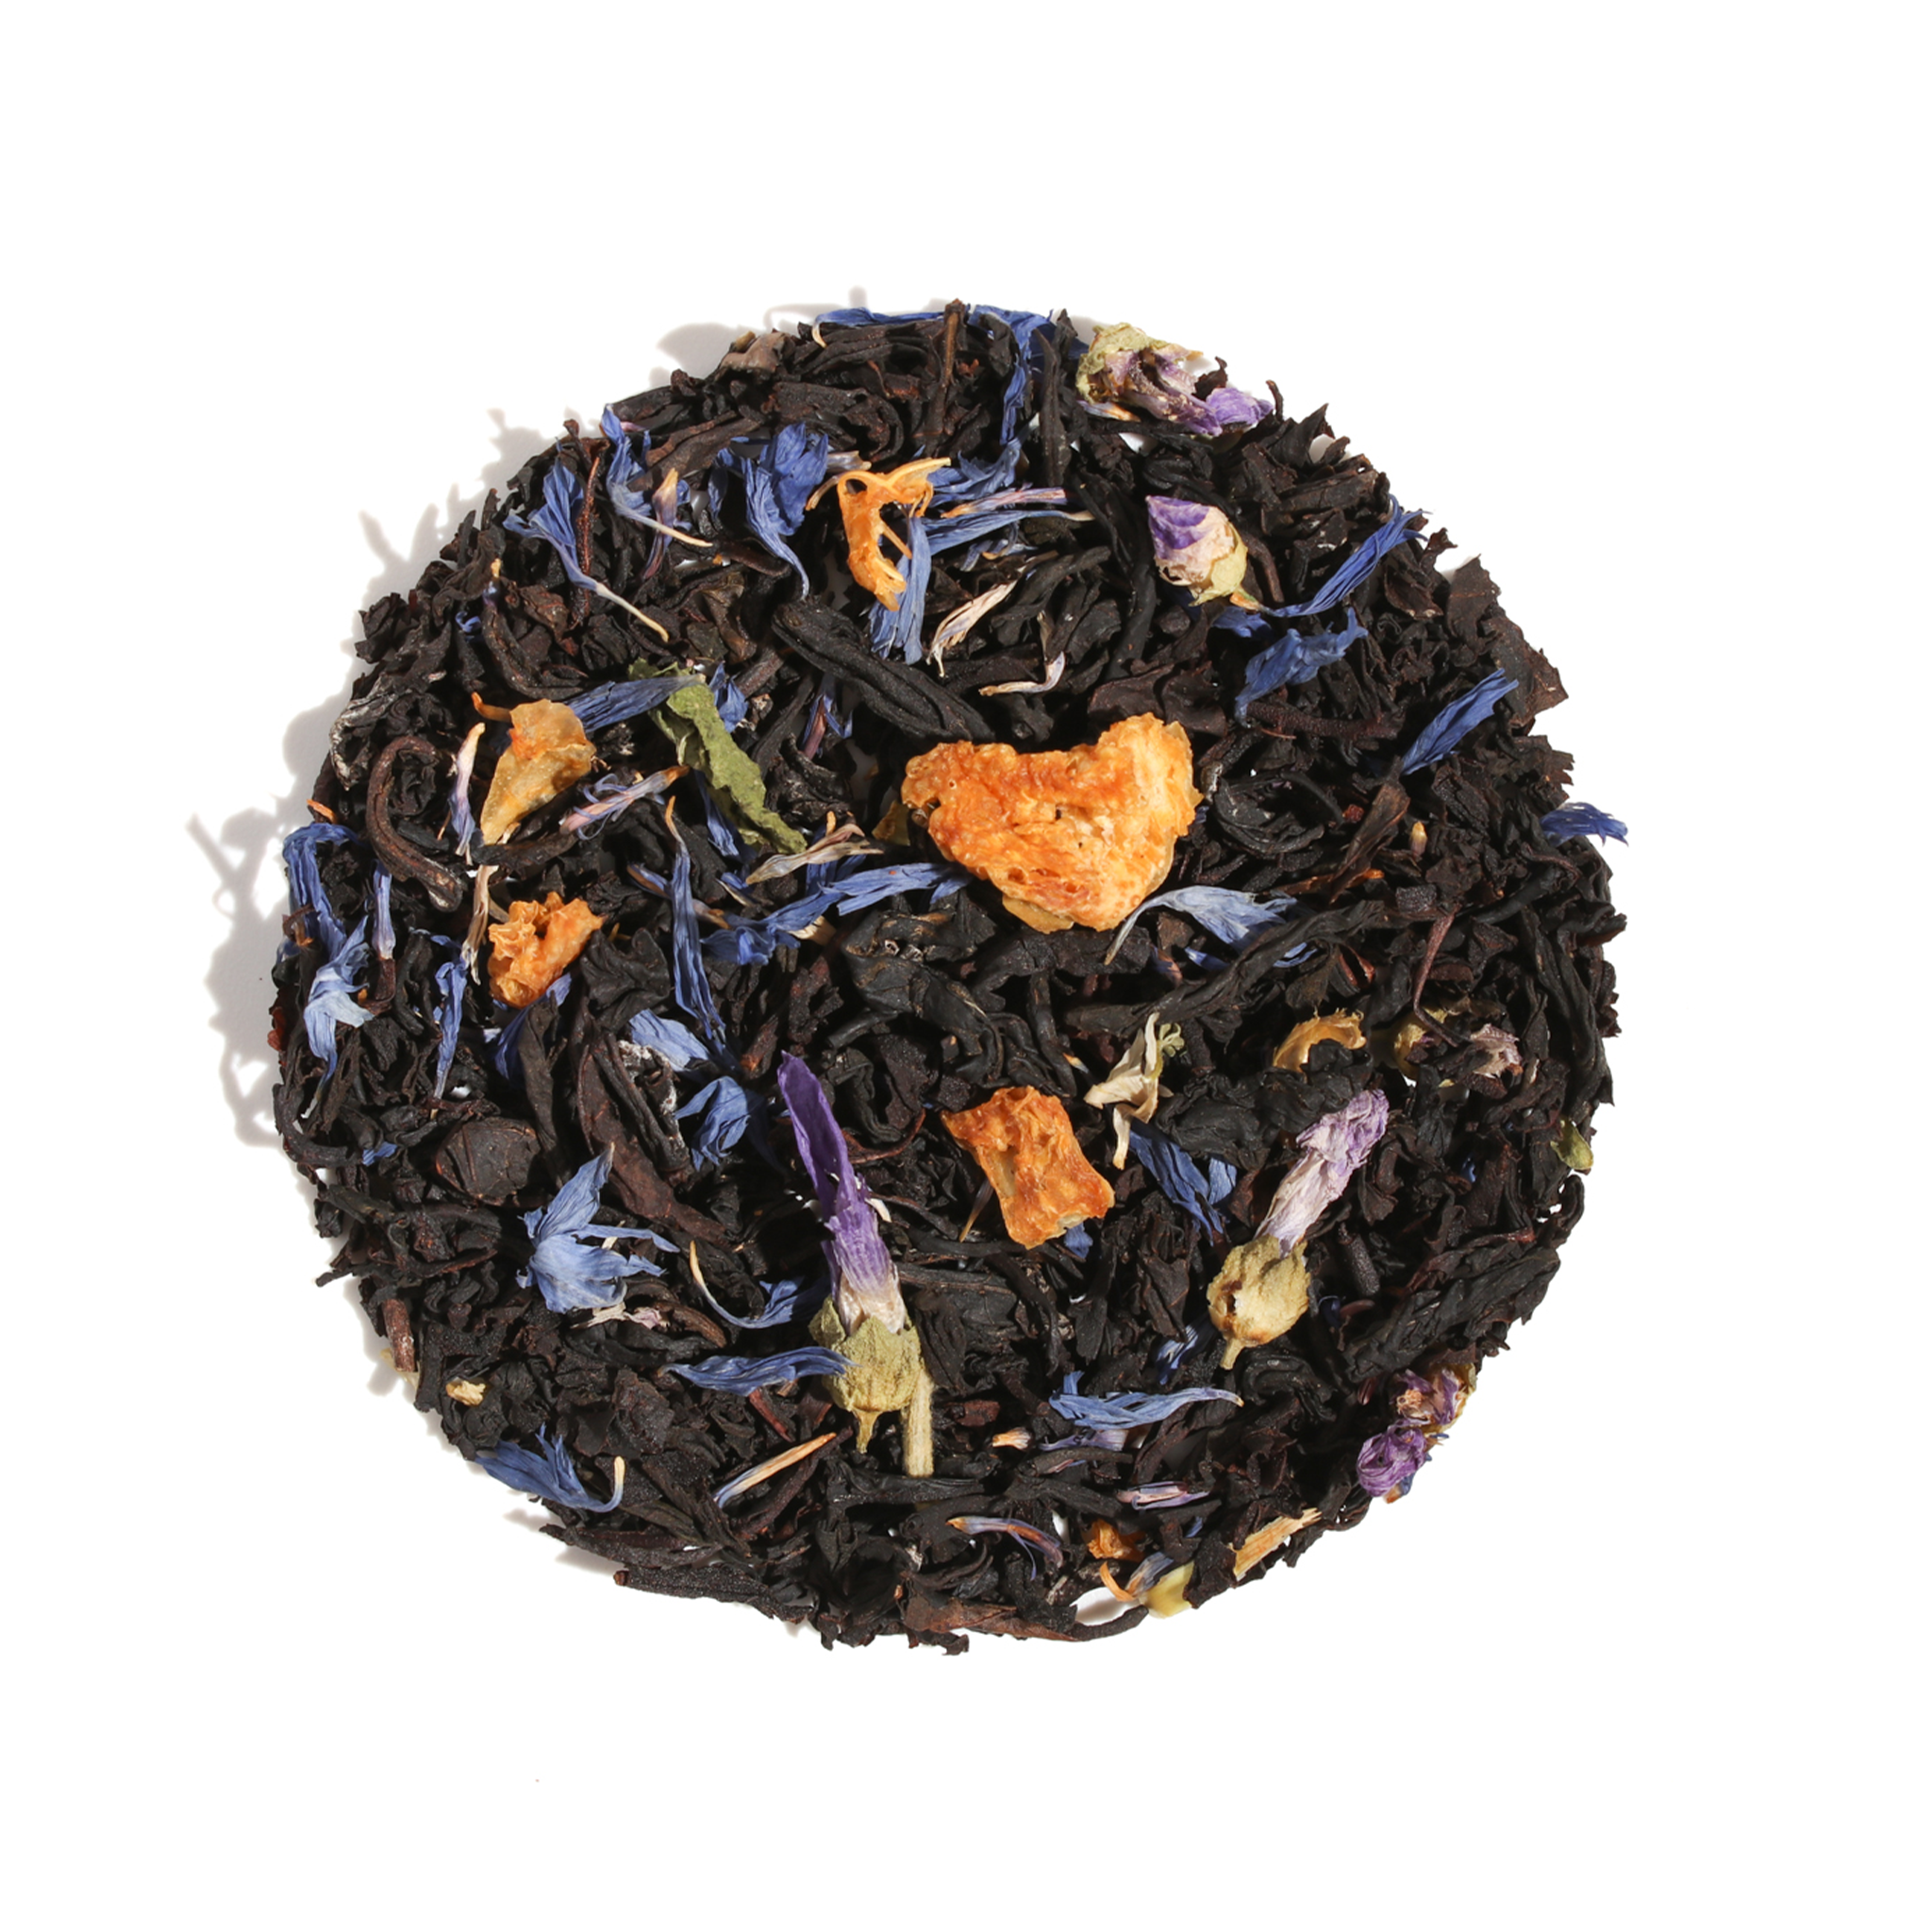 Grantham Grey Black Tea (Violet Earl Grey)